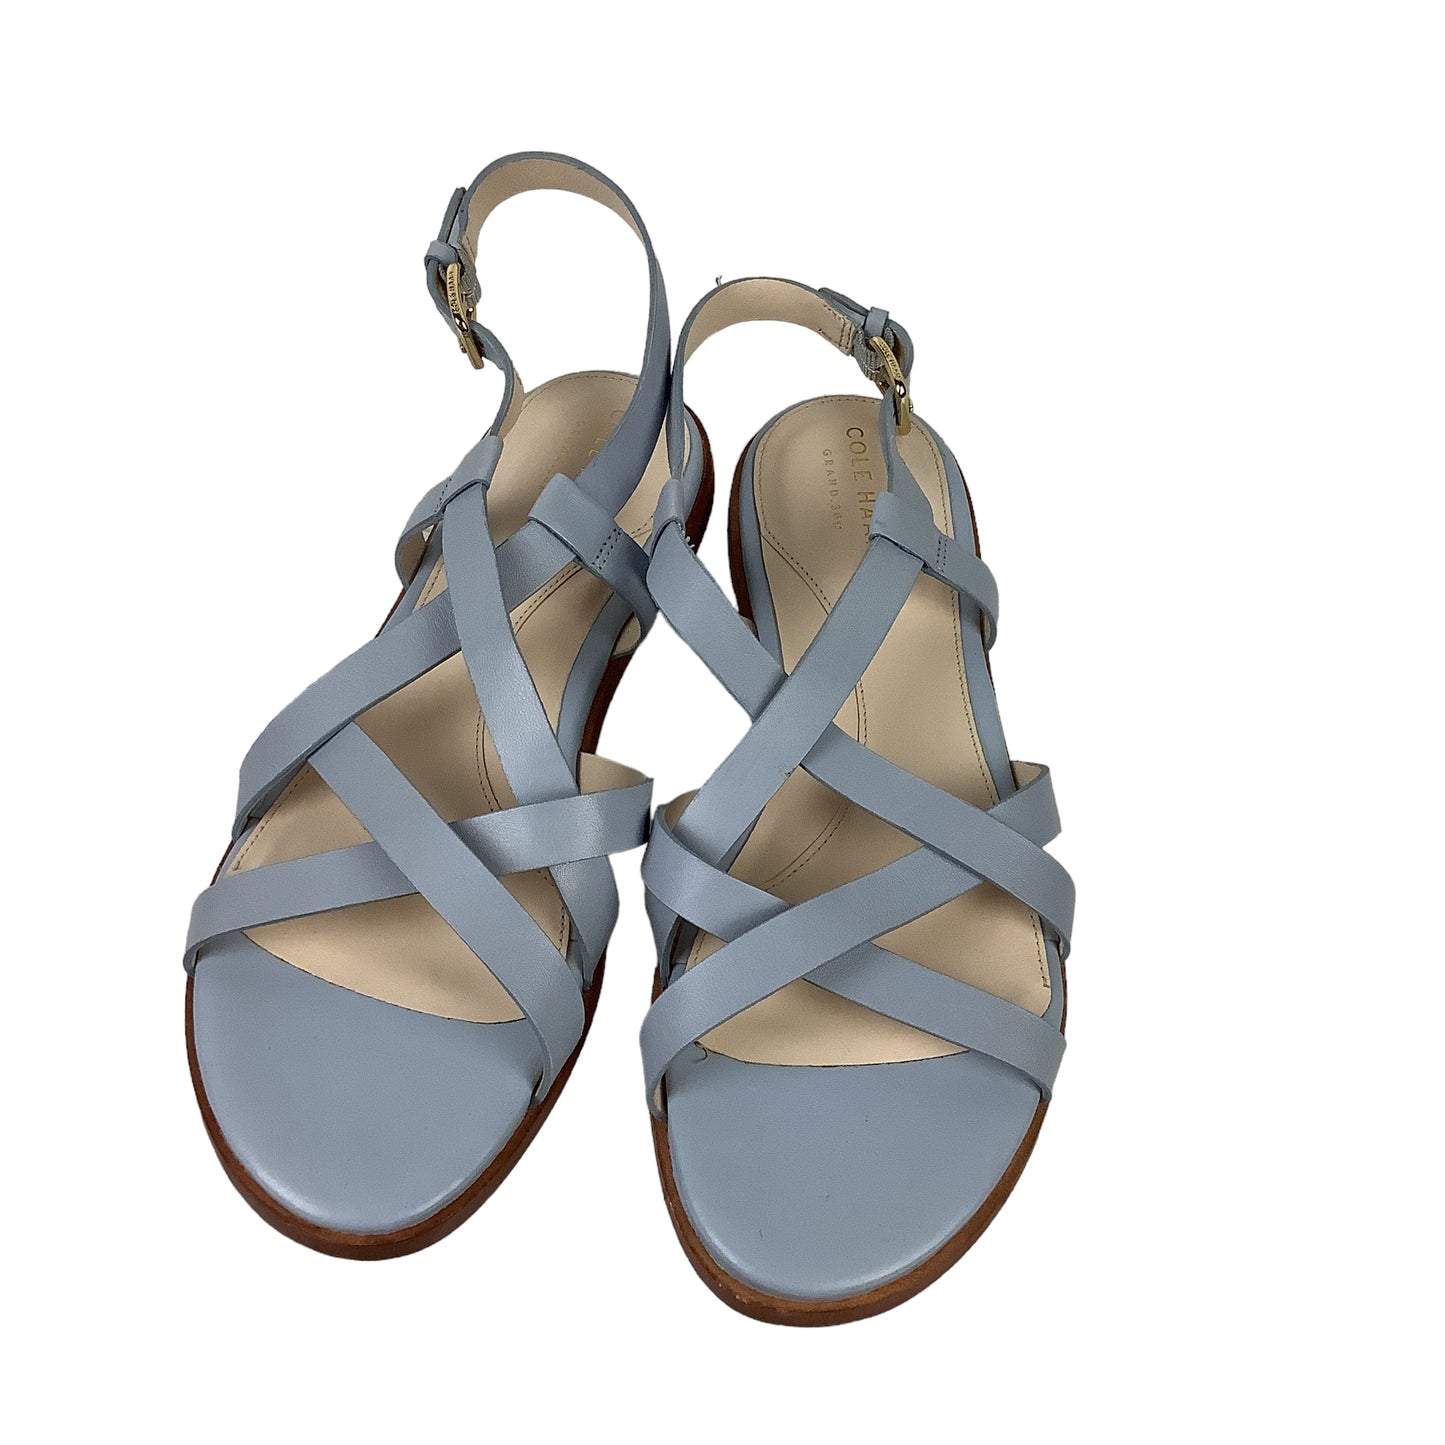 Sandals Designer By Cole-haan  Size: 7